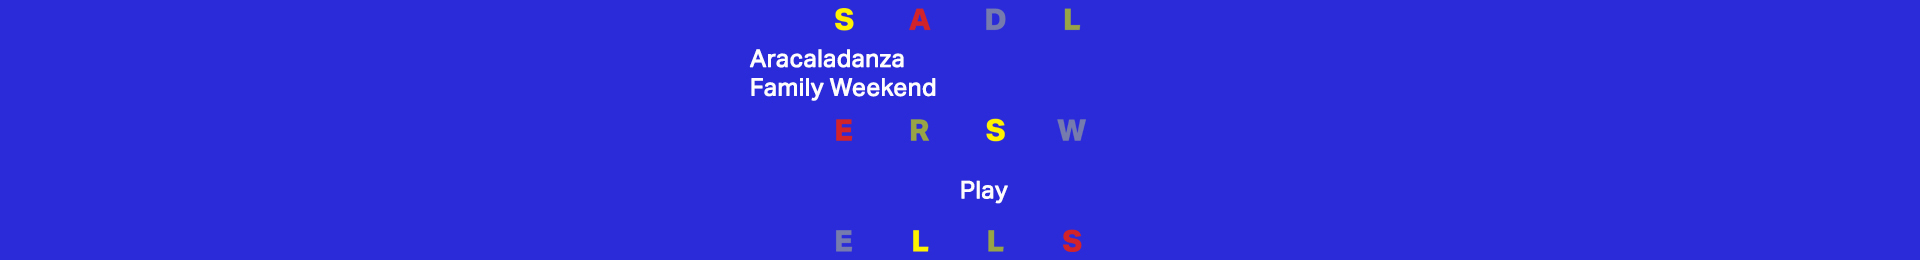 Aracaladanza: Play banner image